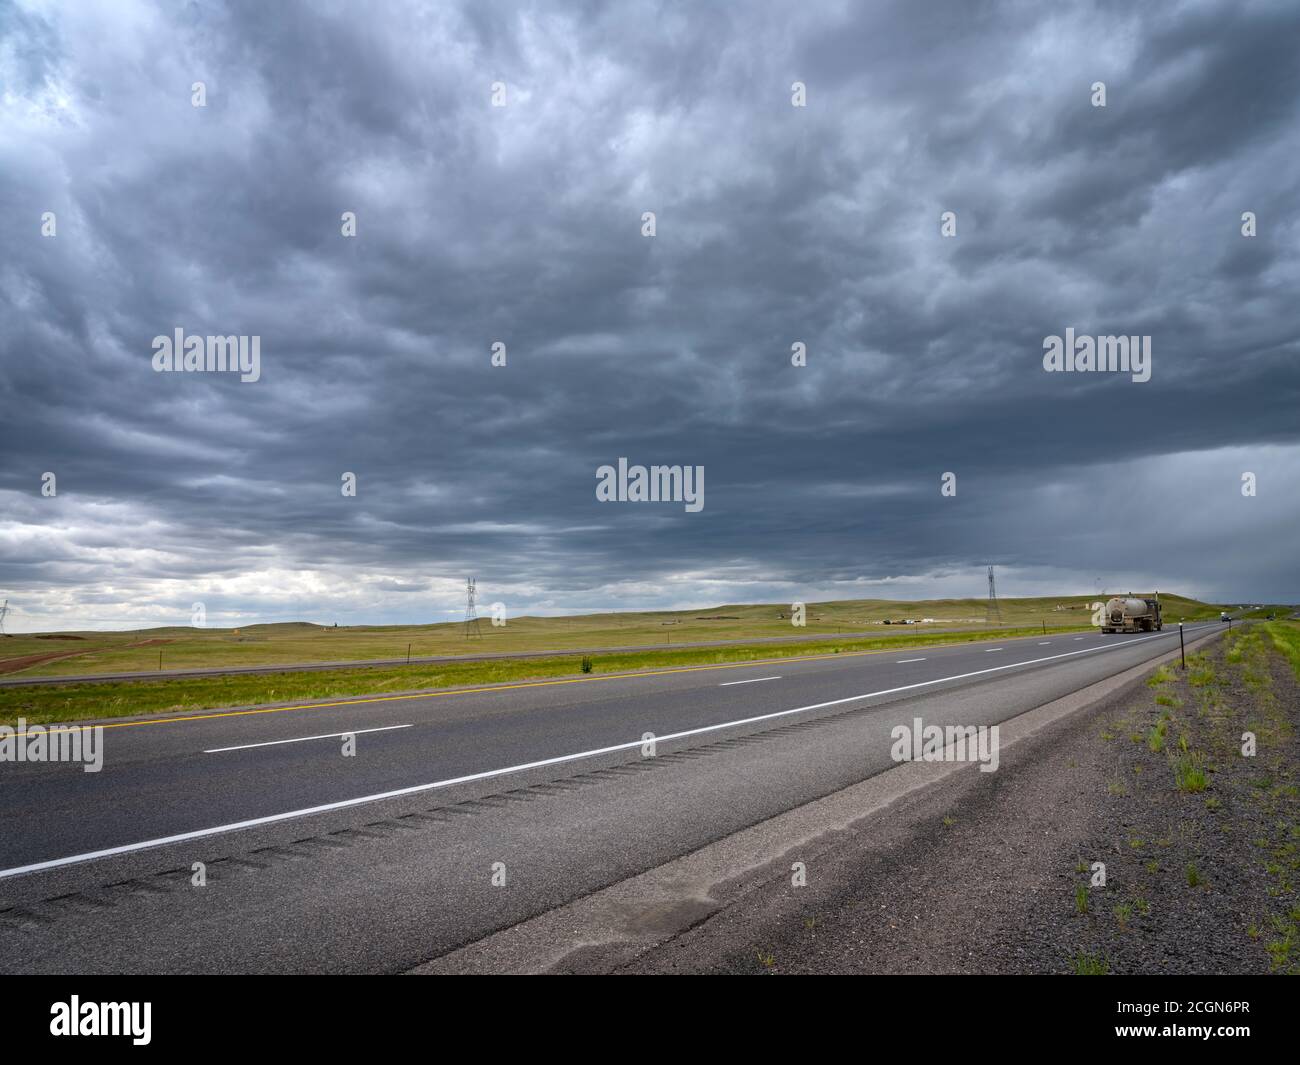 Stormy weather over Nebraska highway Stock Photo